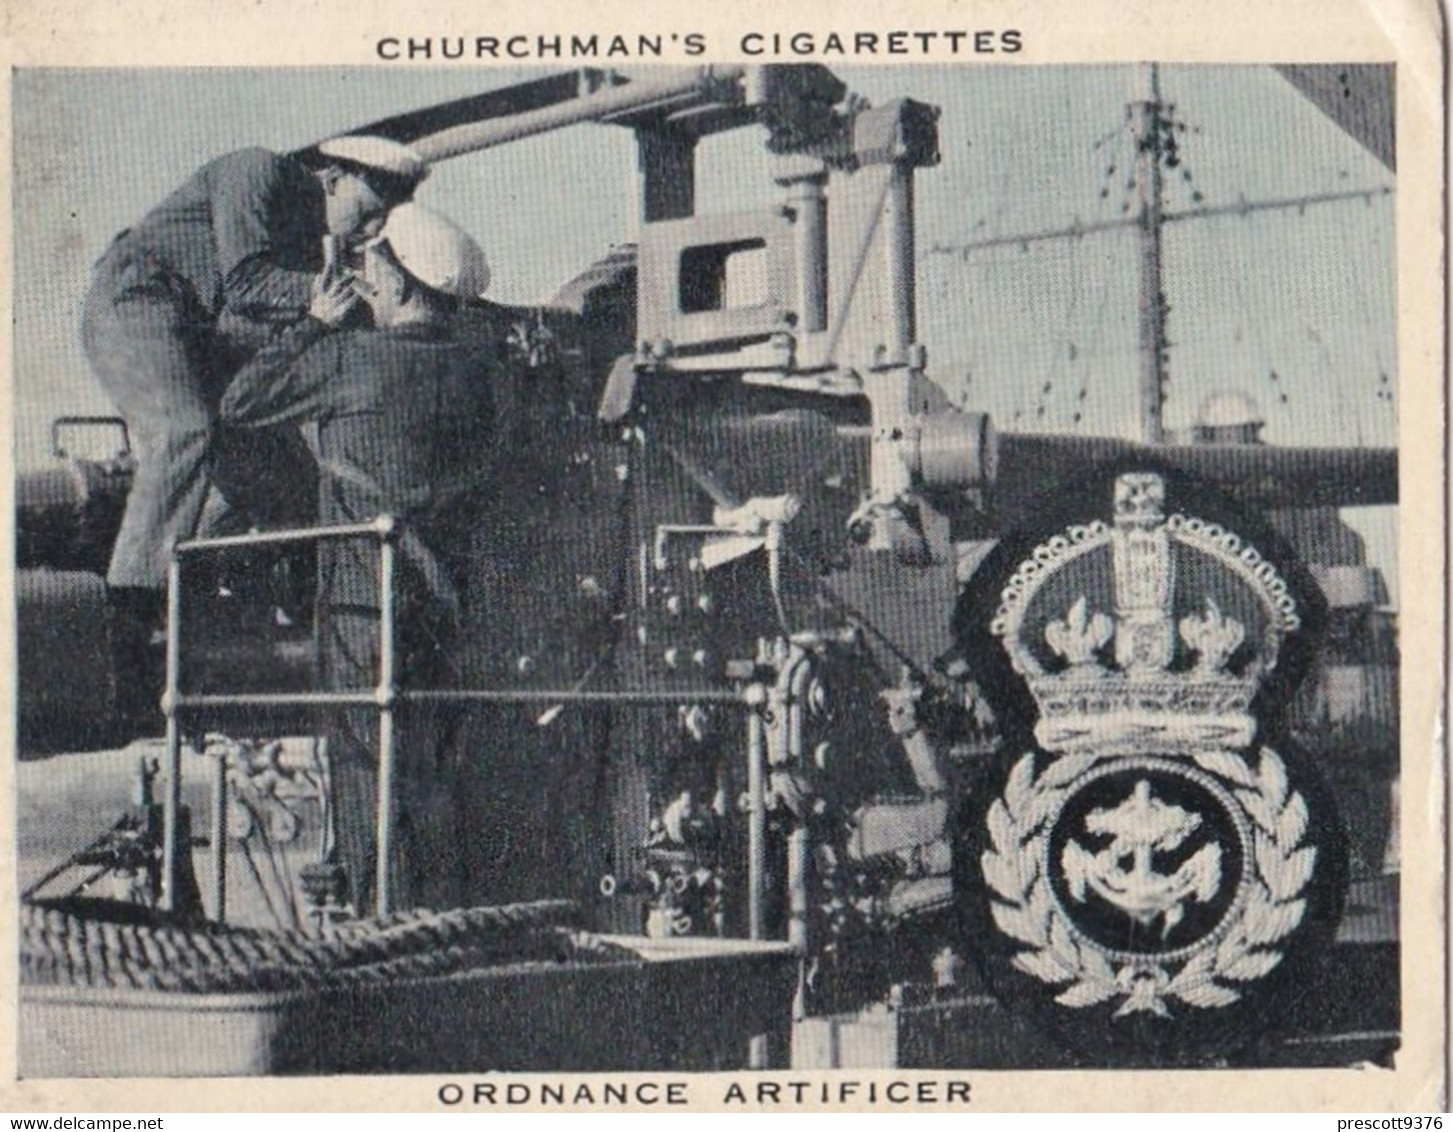 The Navy At Work 1937 -  30 Ordnance Articifer - Churchman - Military - M Size - Ranks - Badges - Churchman